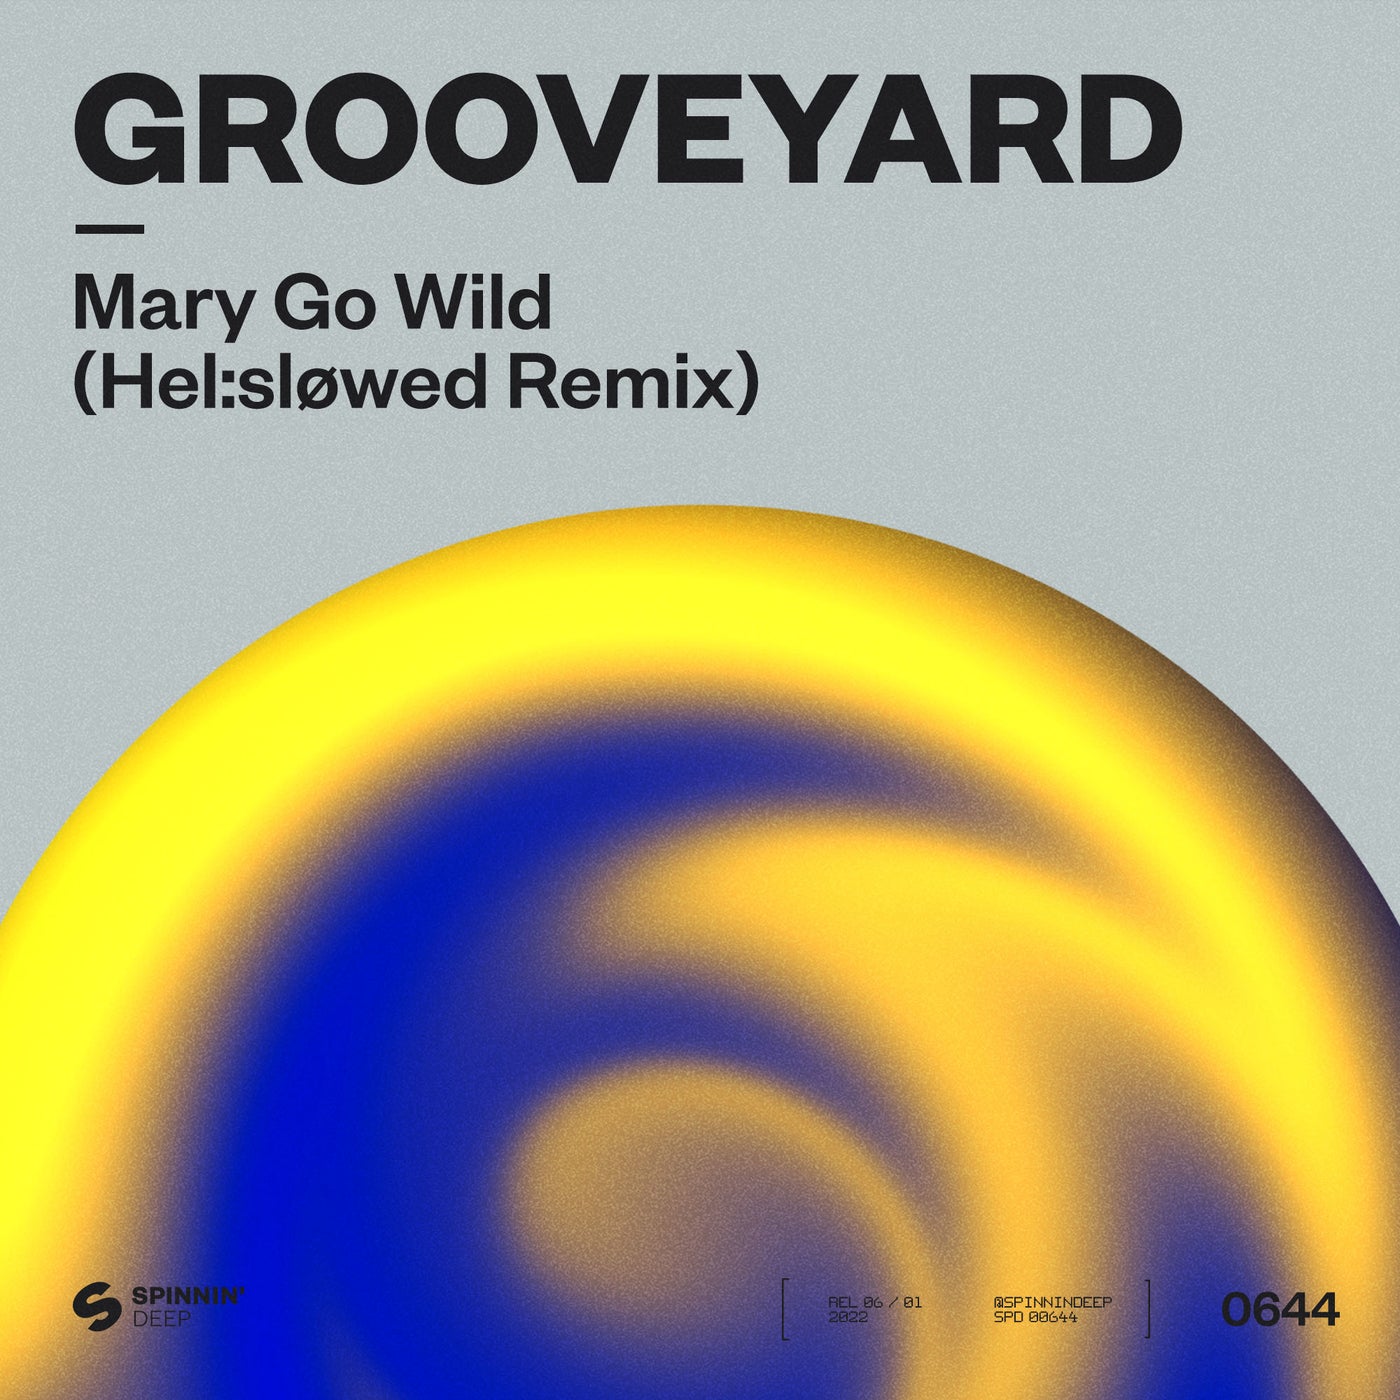 Grooveyard music download - Beatport